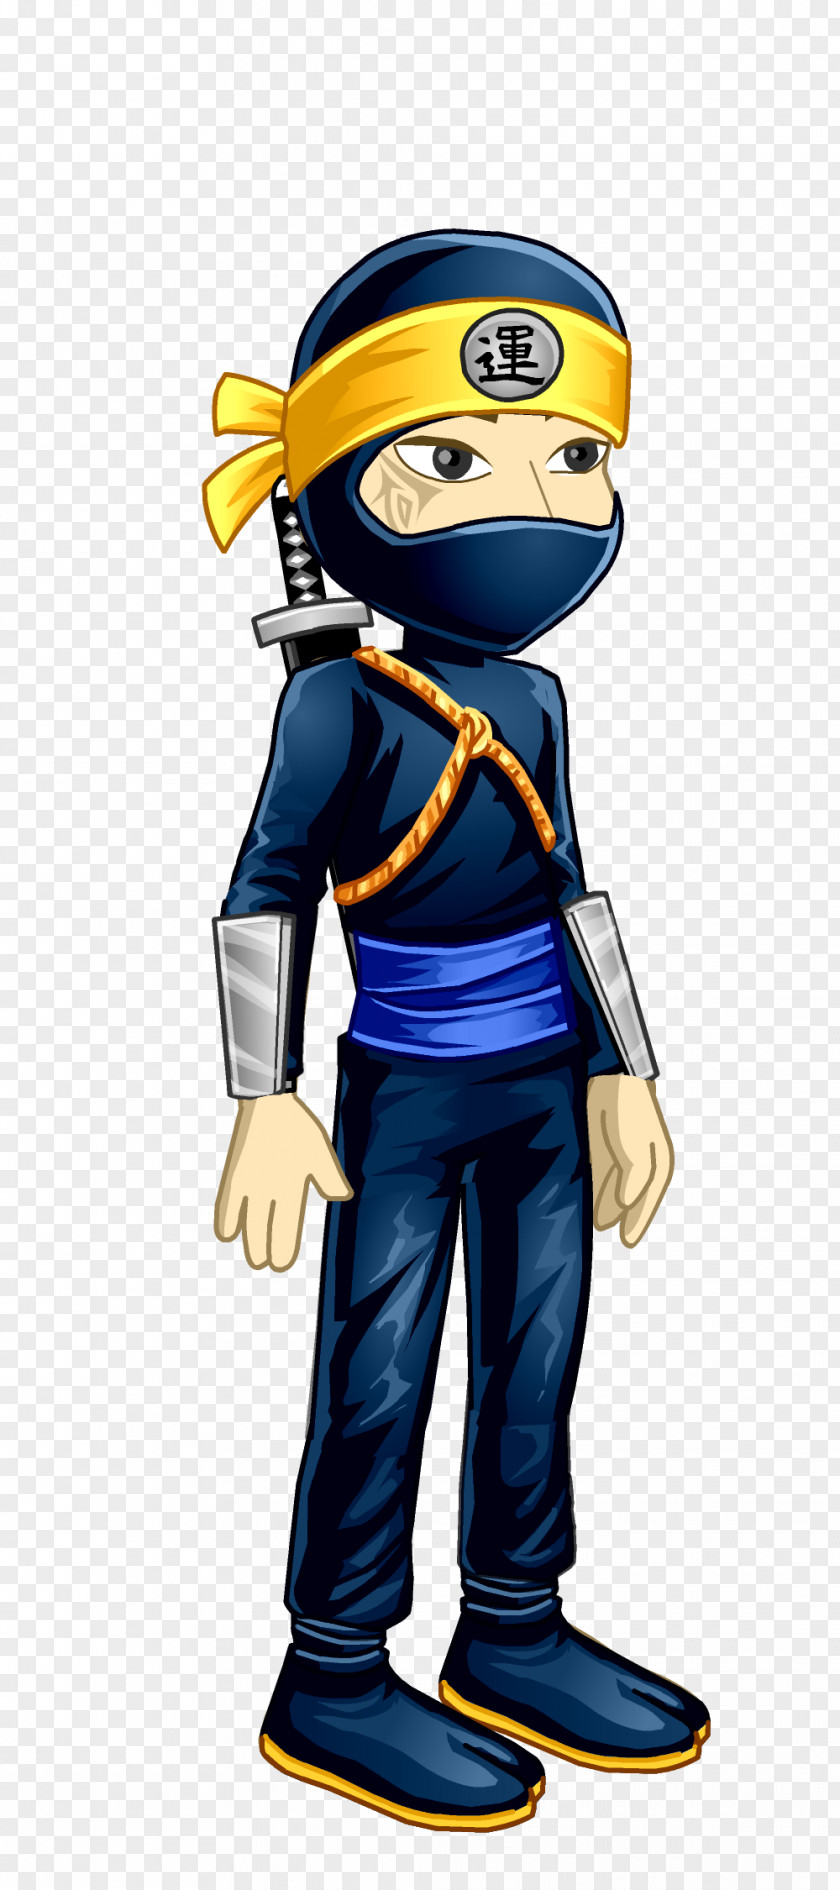 Cartoon Character Mascot Headgear PNG